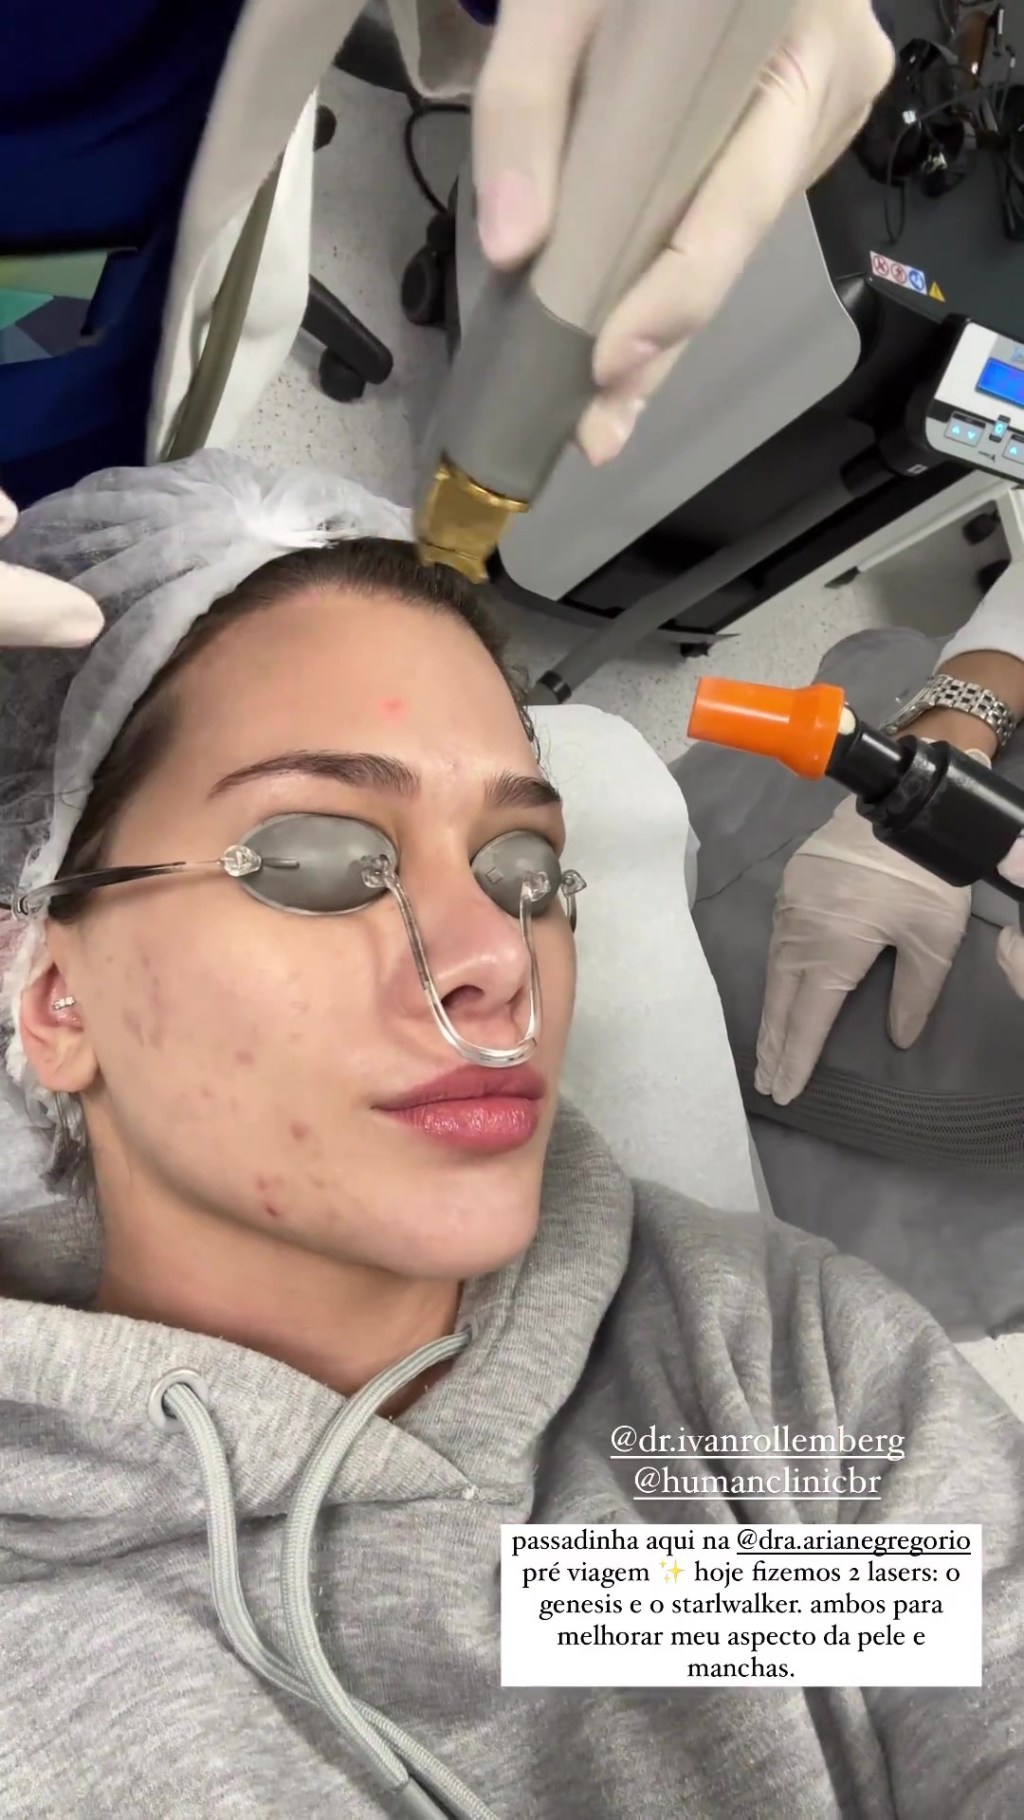 Flavia Pavanelli fazendo laser no rosto